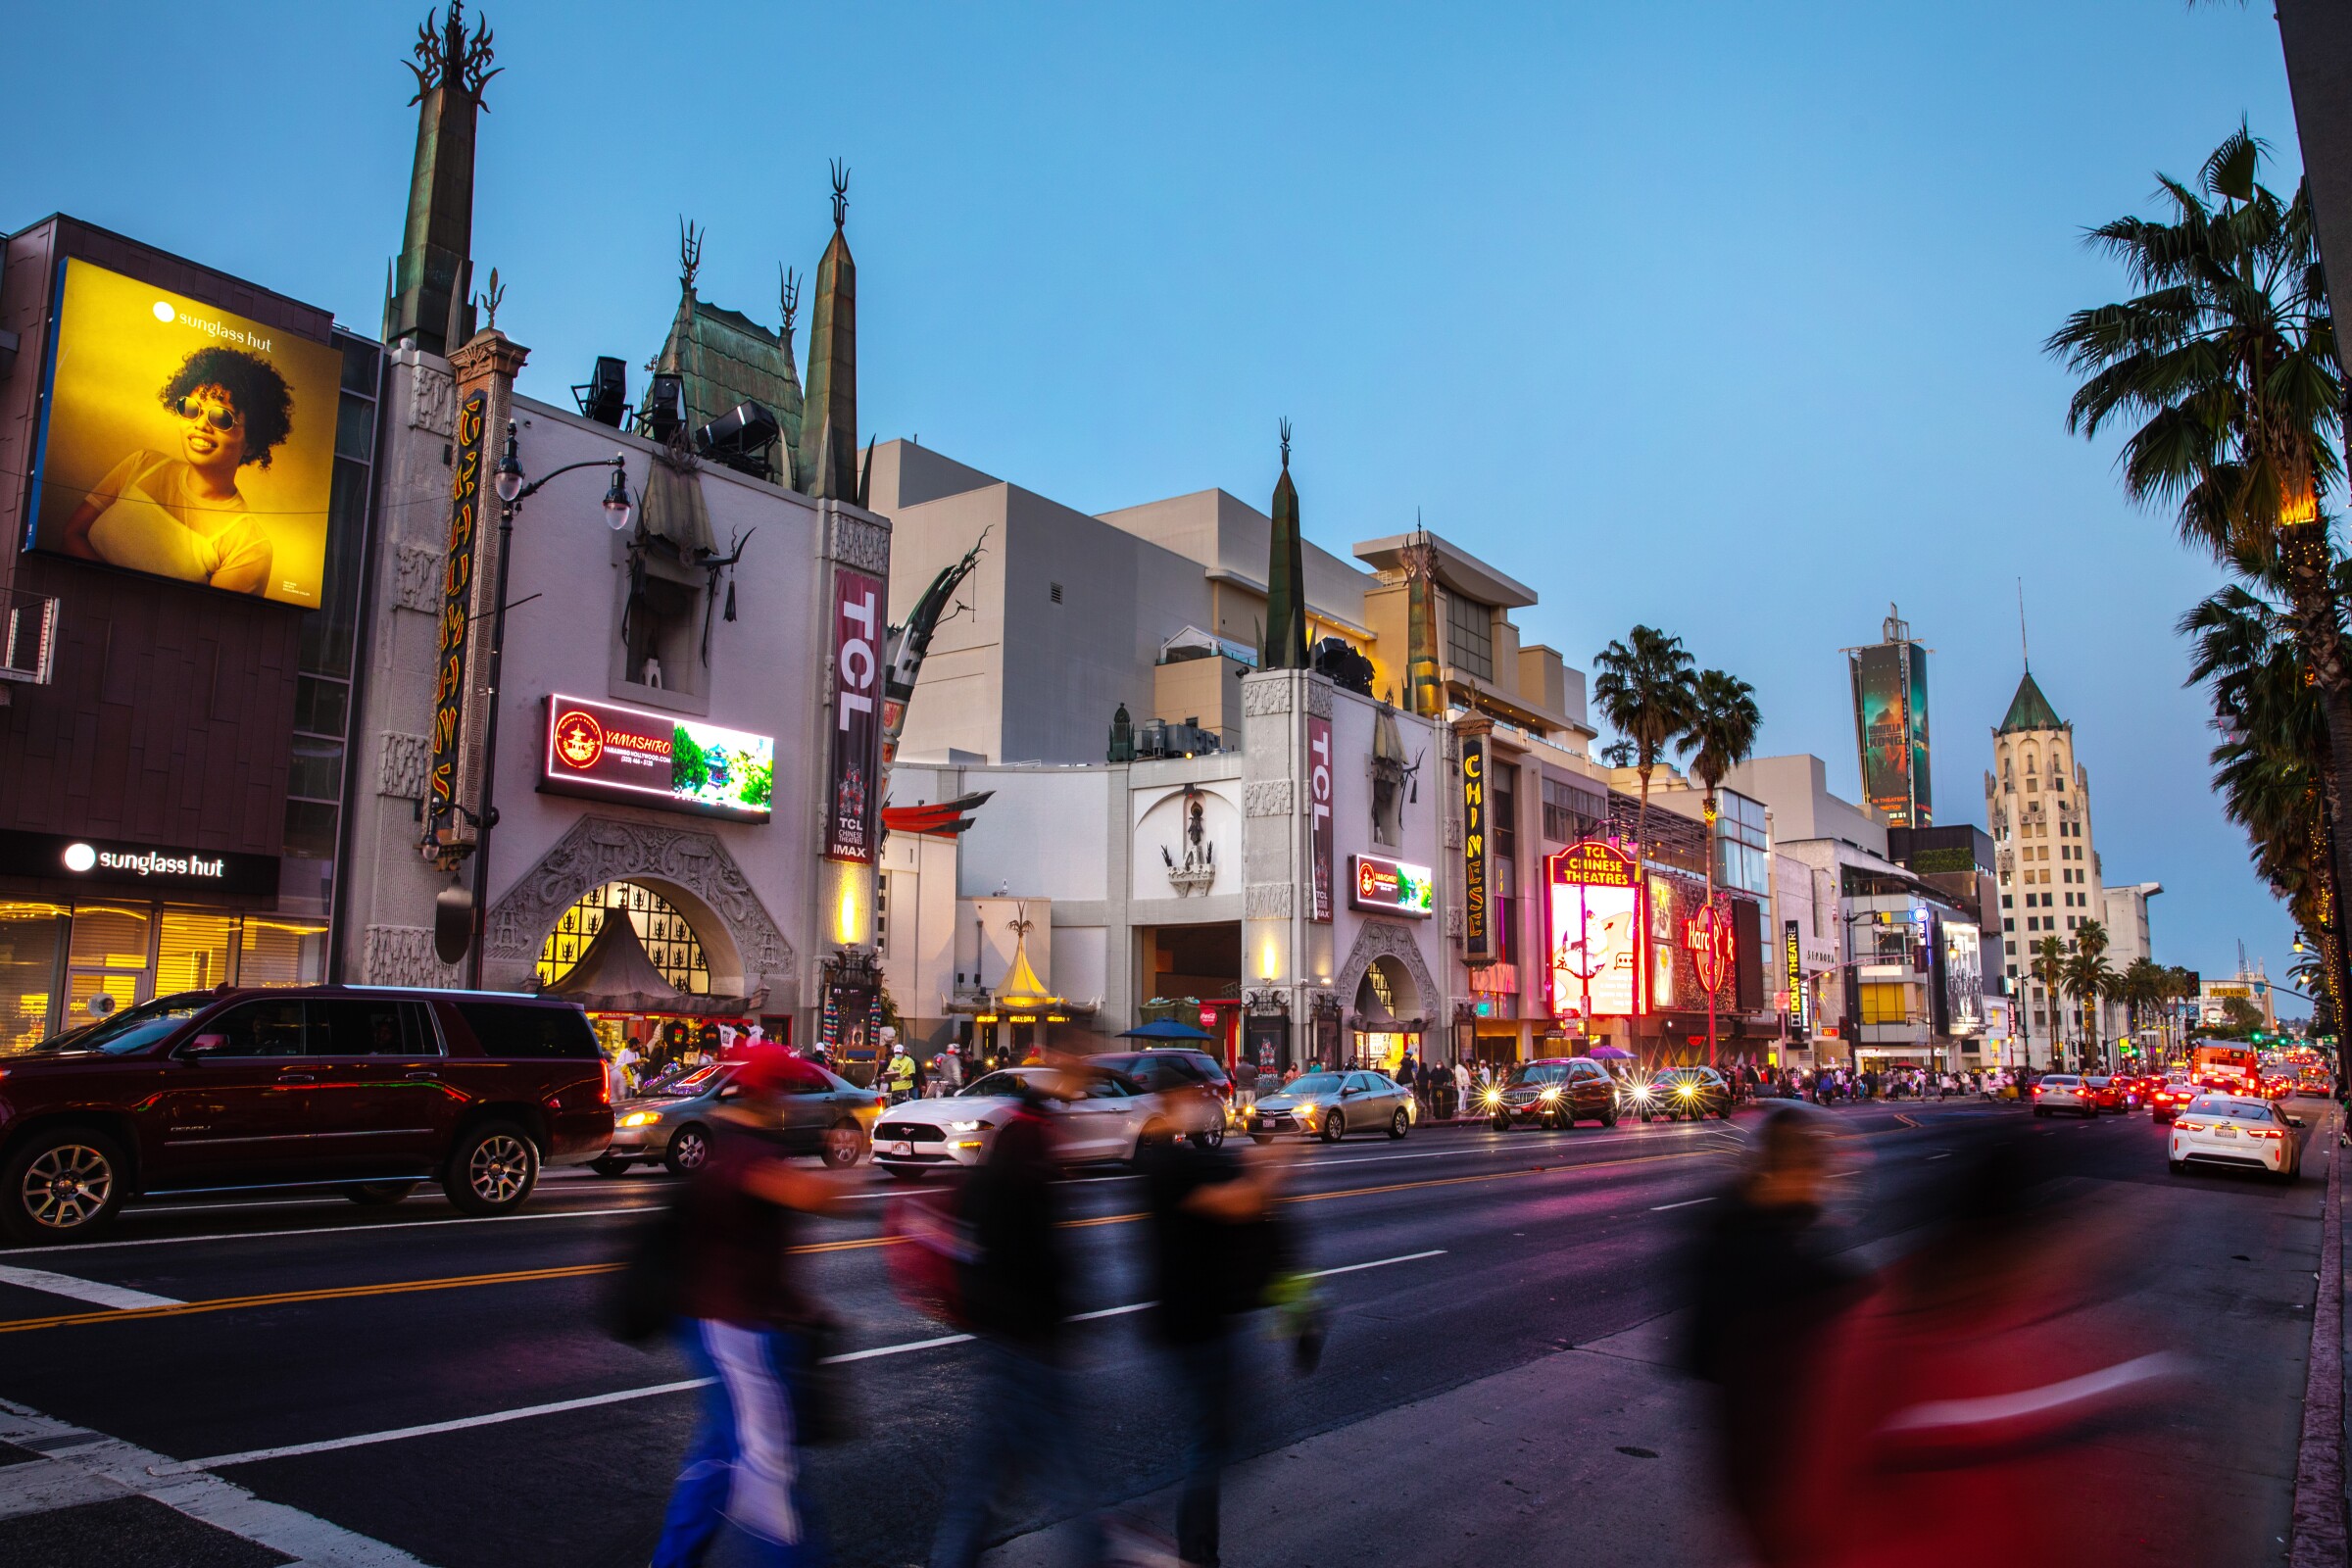 People walk along Hollywood Boulevard